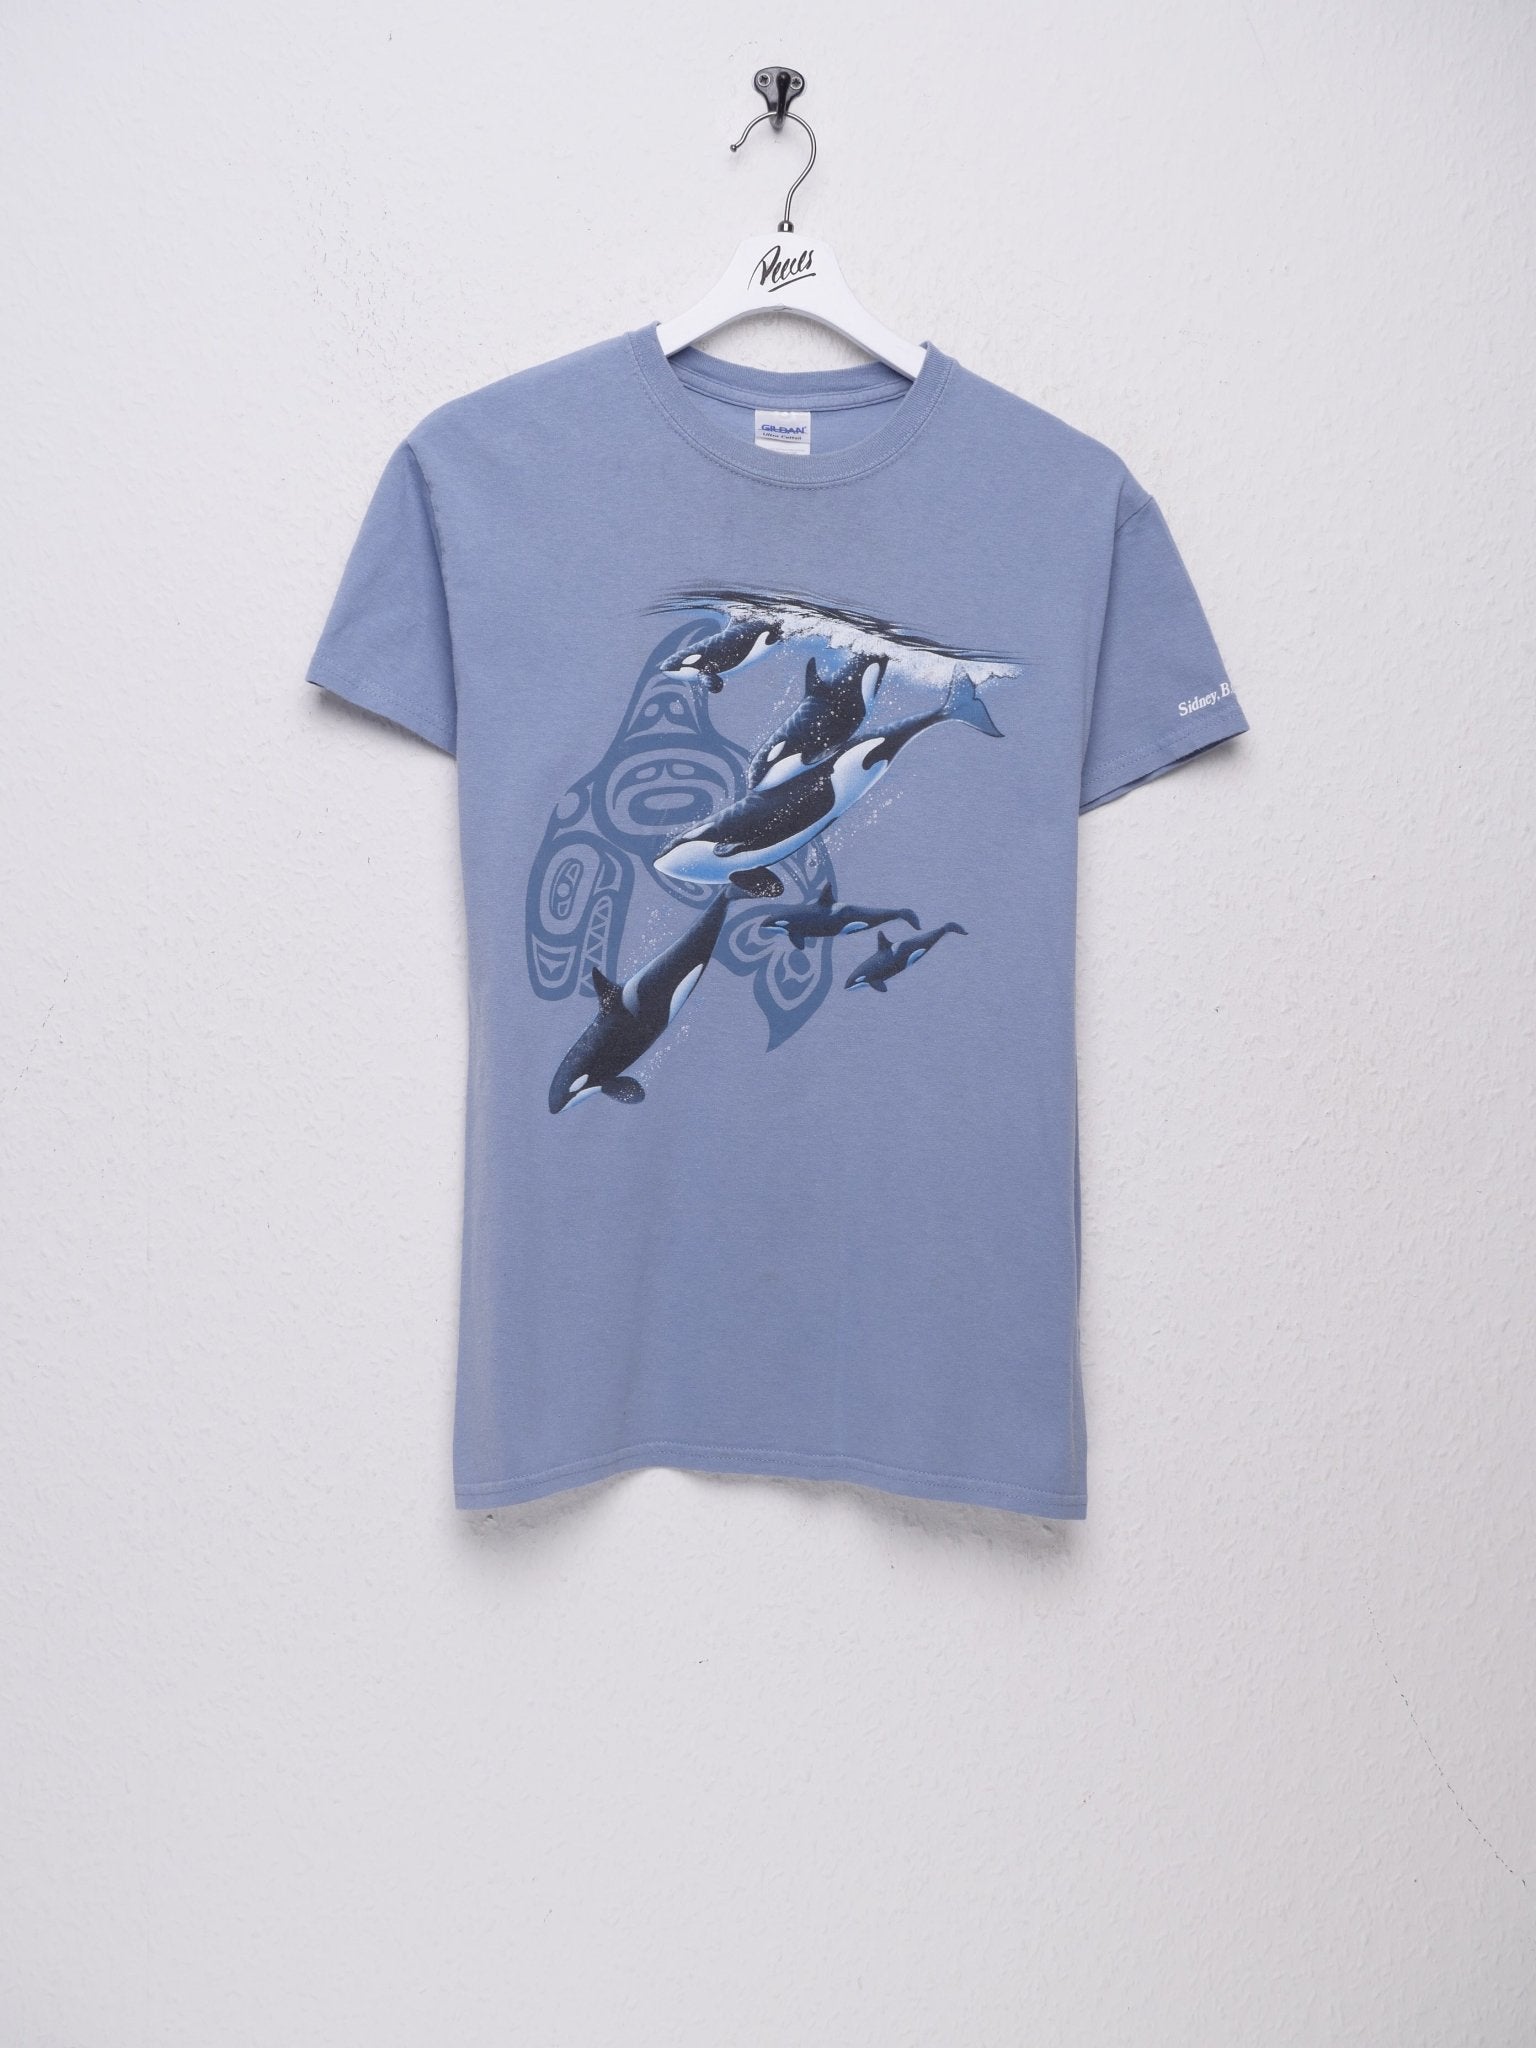 Orca printed Graphic blue Shirt - Peeces